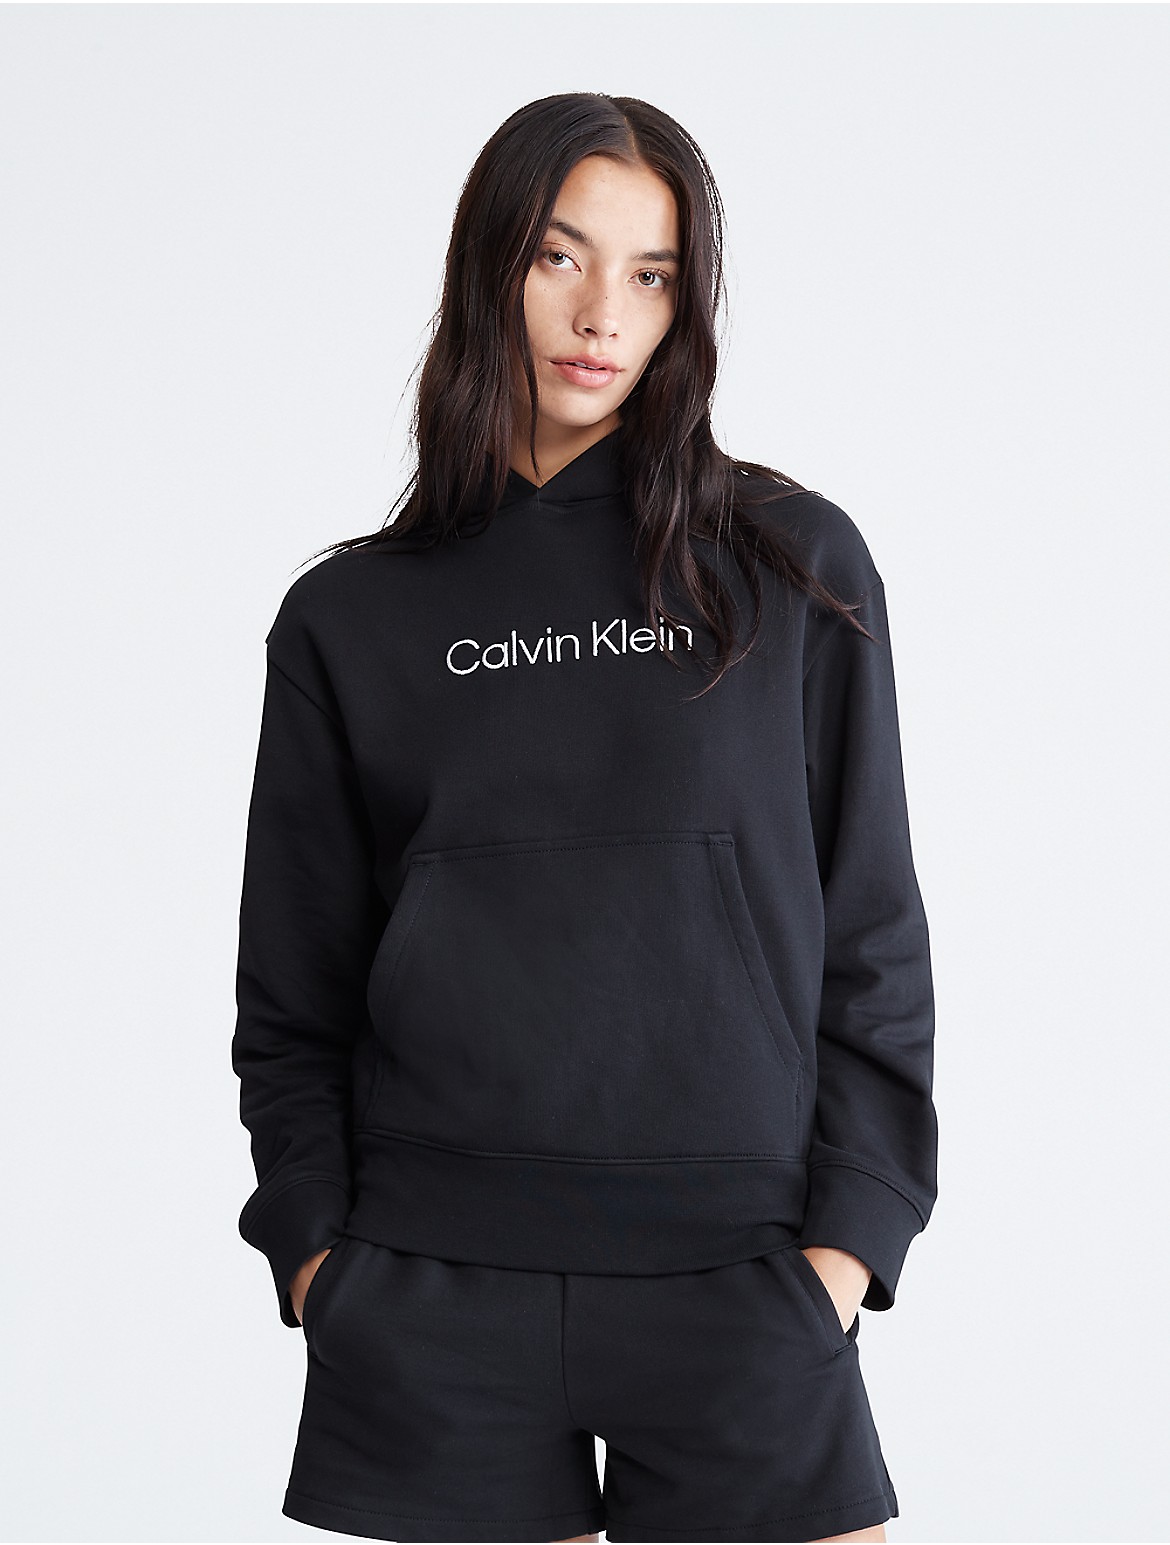 Calvin Klein Women's Relaxed Fit Standard Logo Hoodie - Black - XS